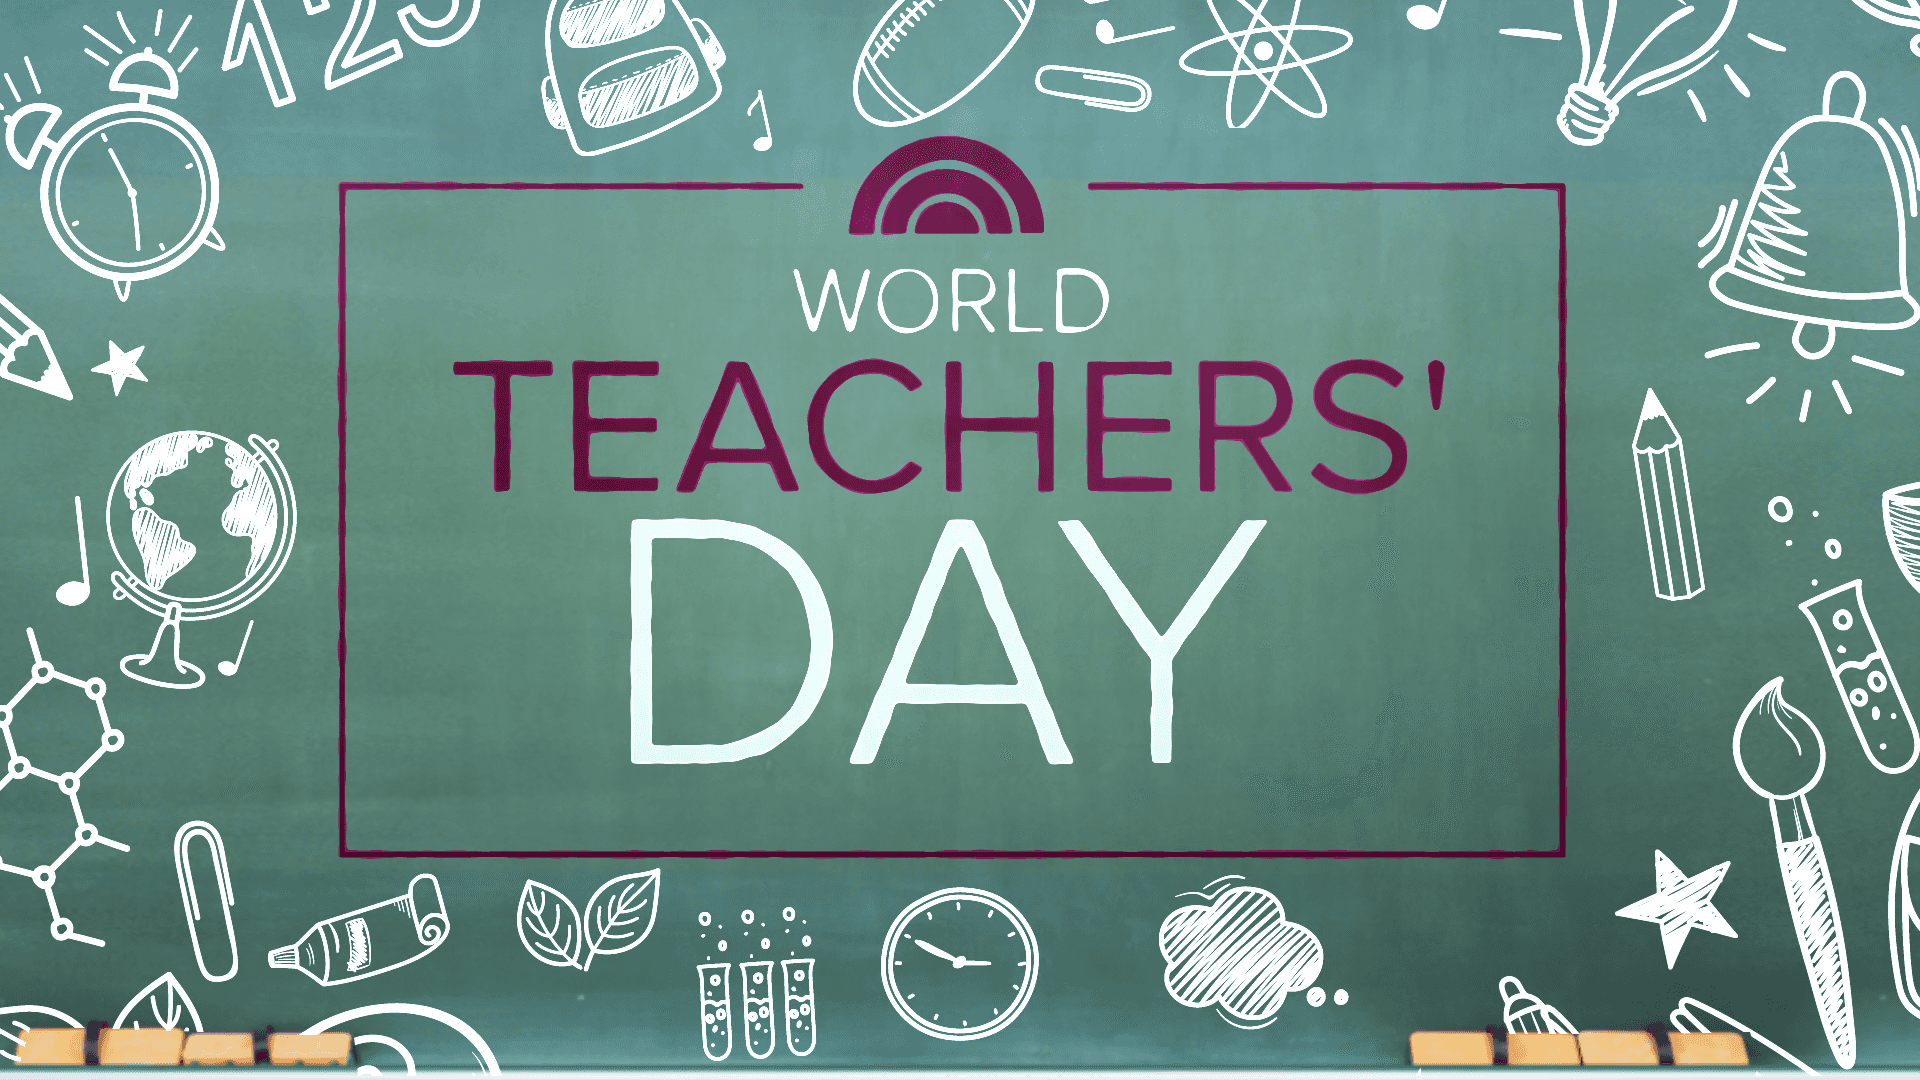 World Teachers Day - A Chalkboard With A Chalkboard Background